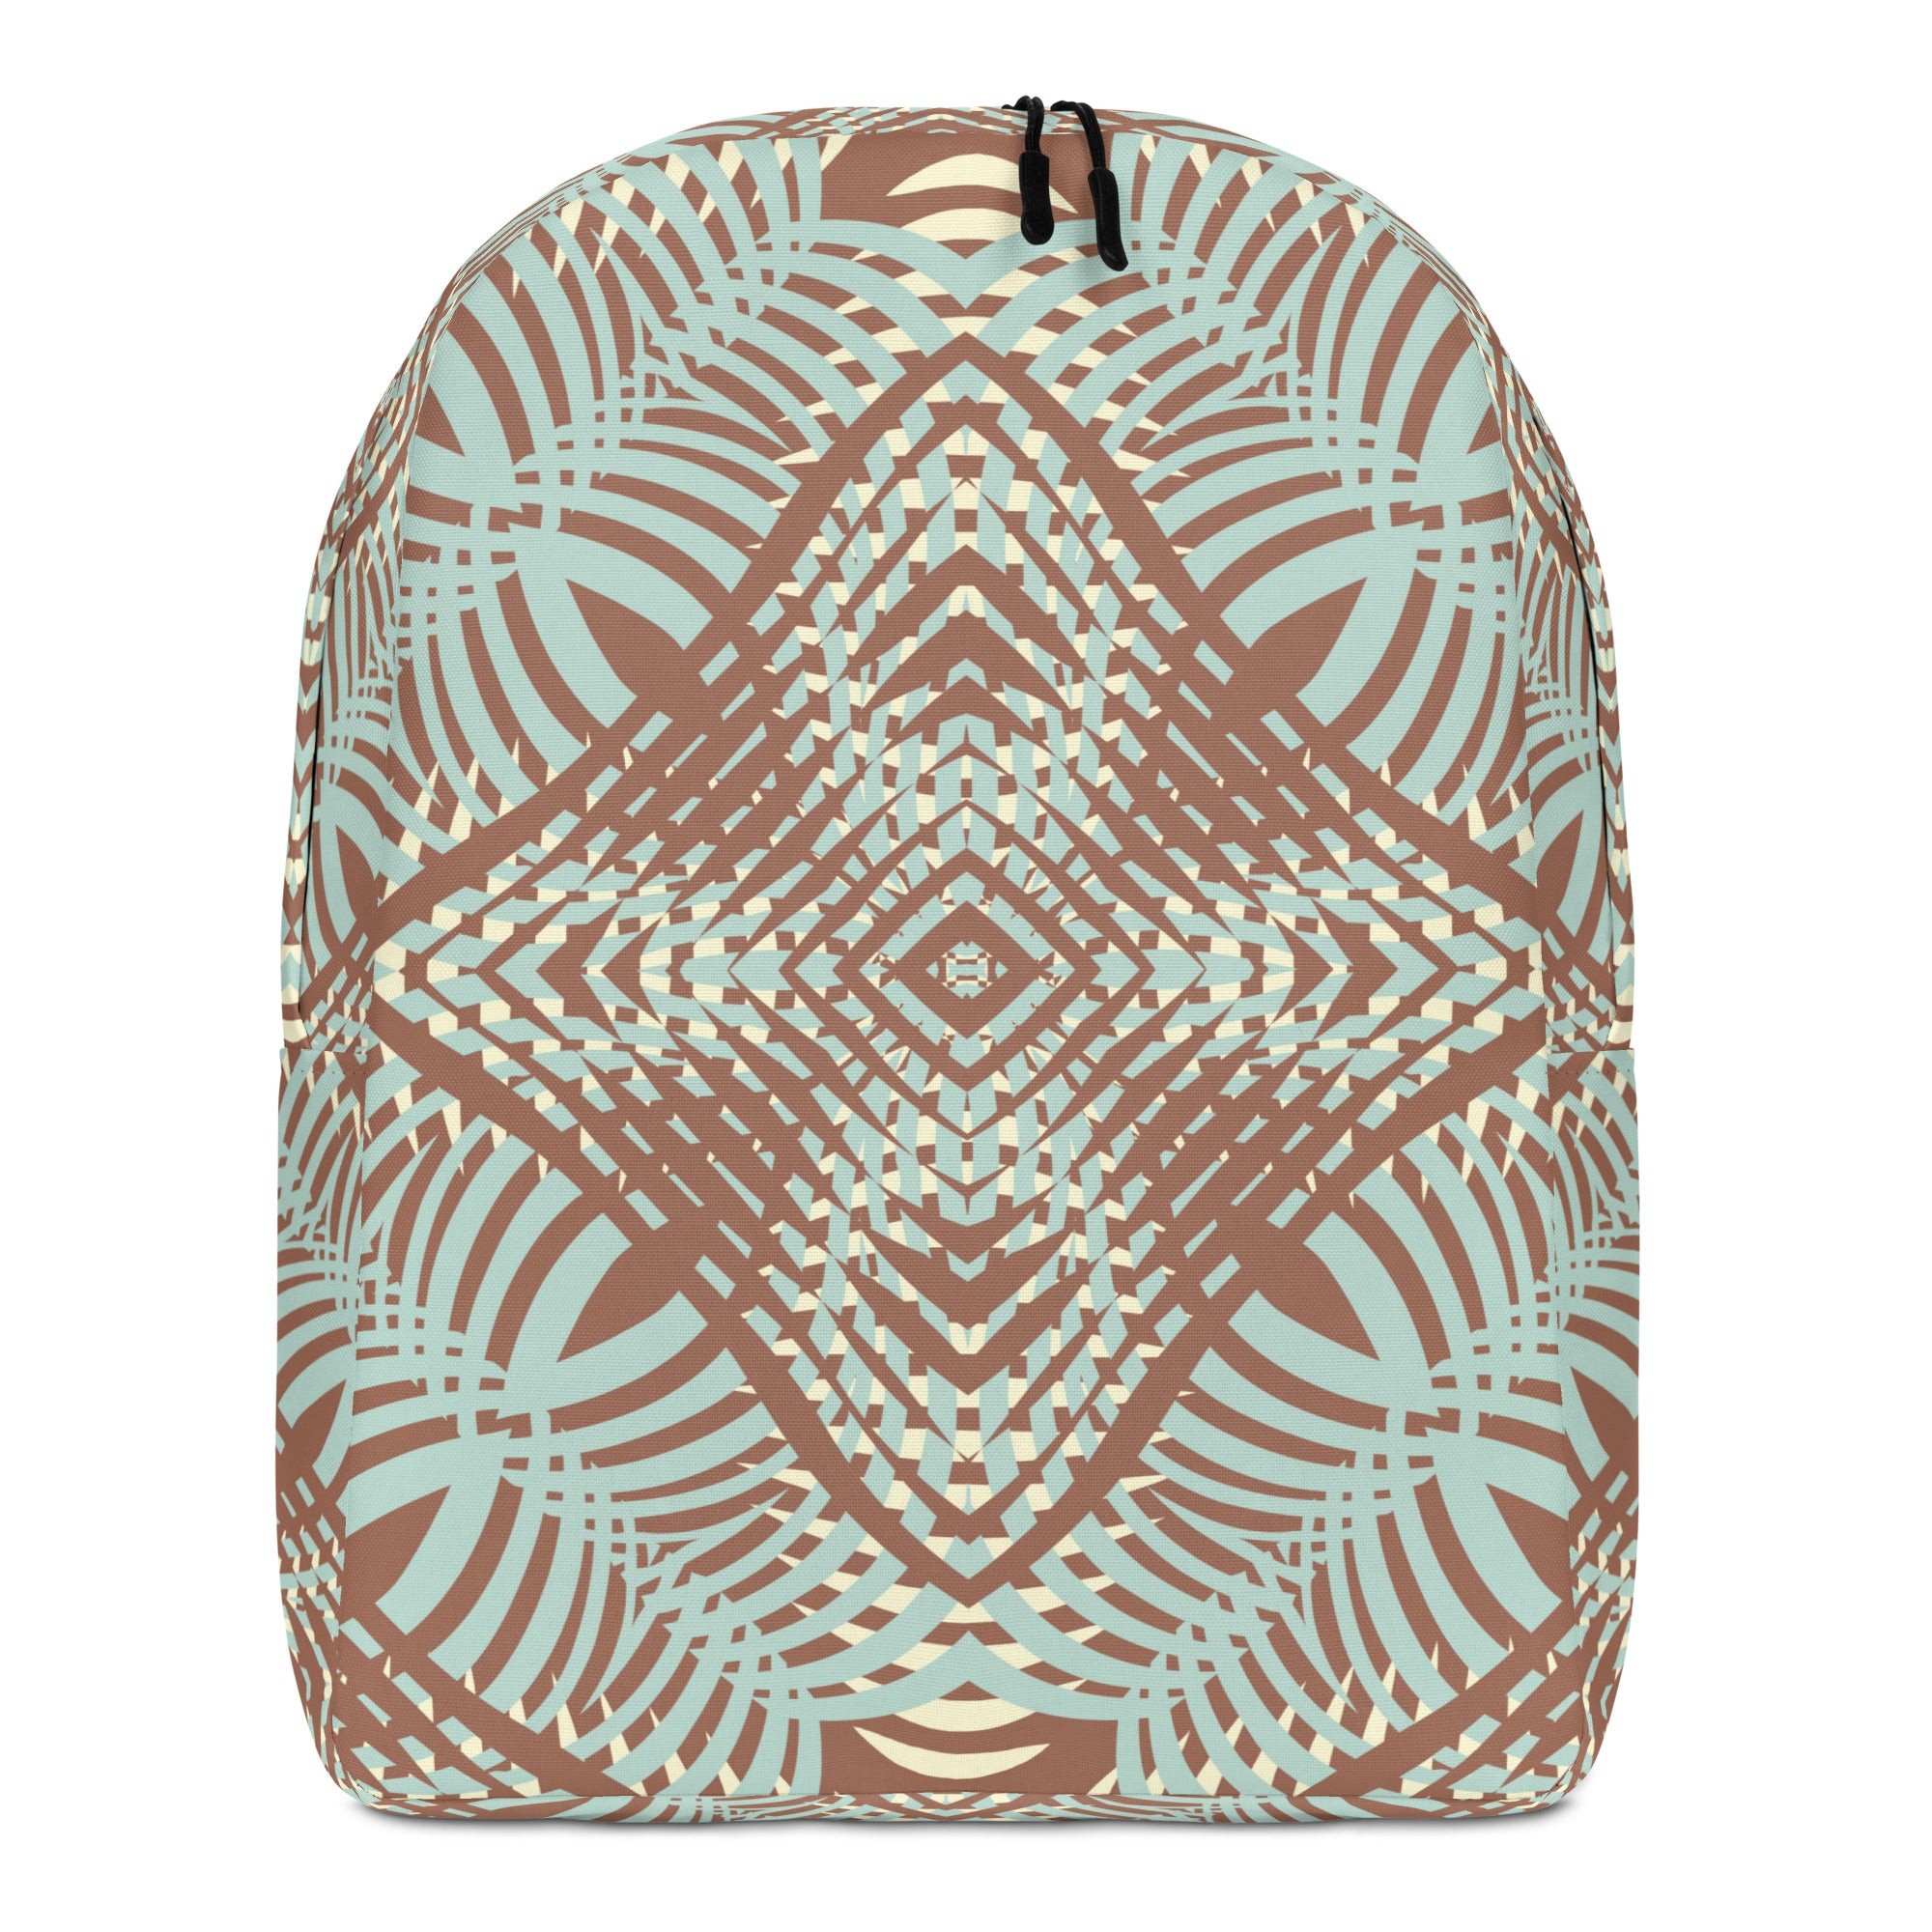 Minimalist Backpack- African Motif Pattern II